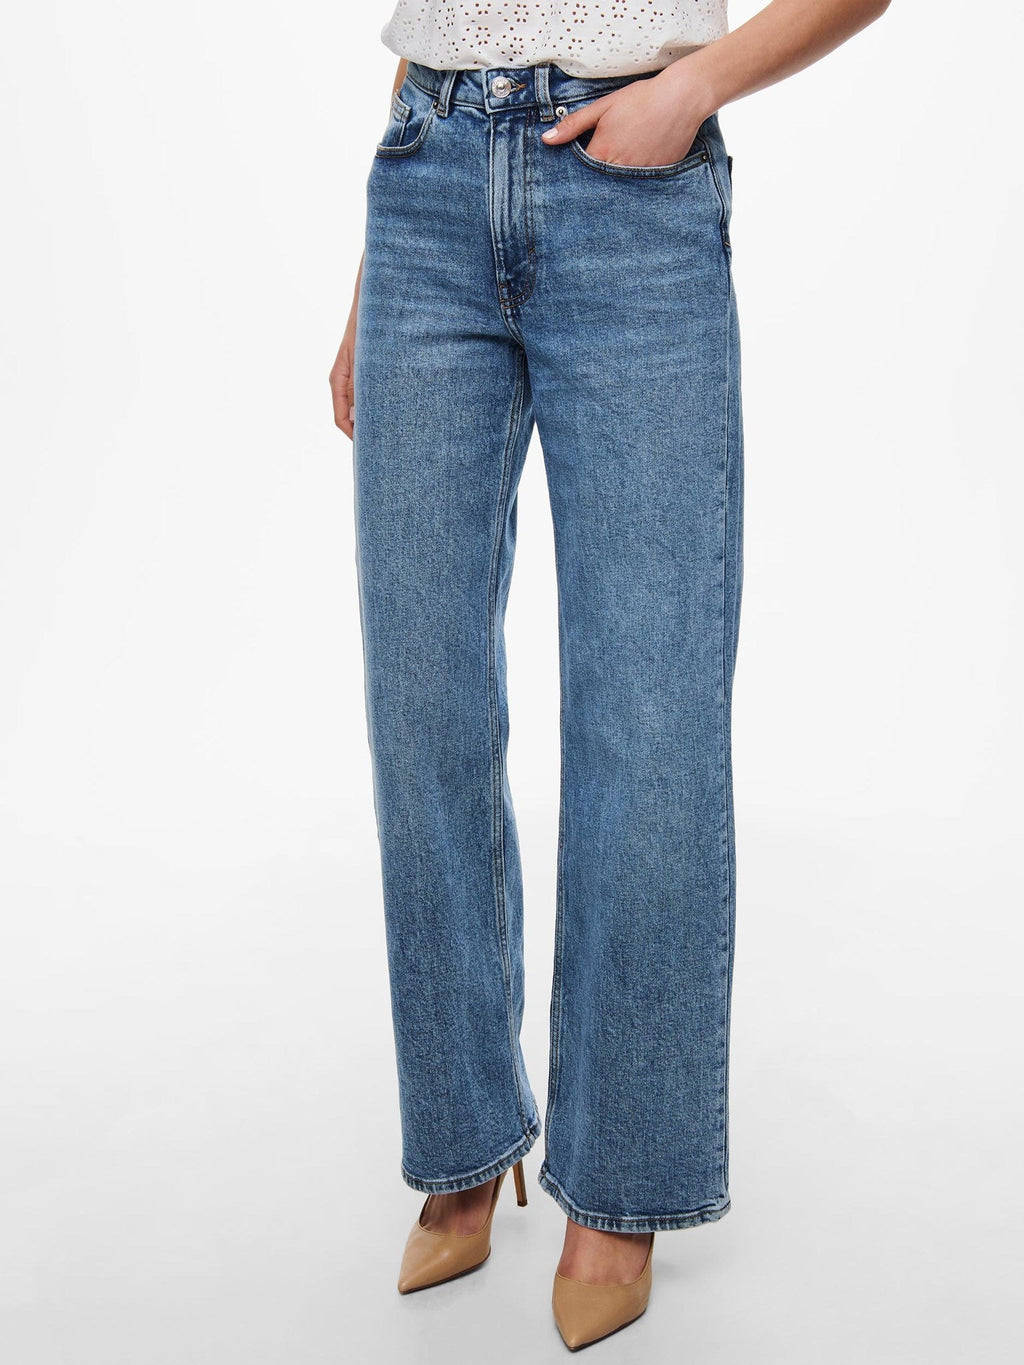 Jeans jugosos (pierna ancha) - Denim azul